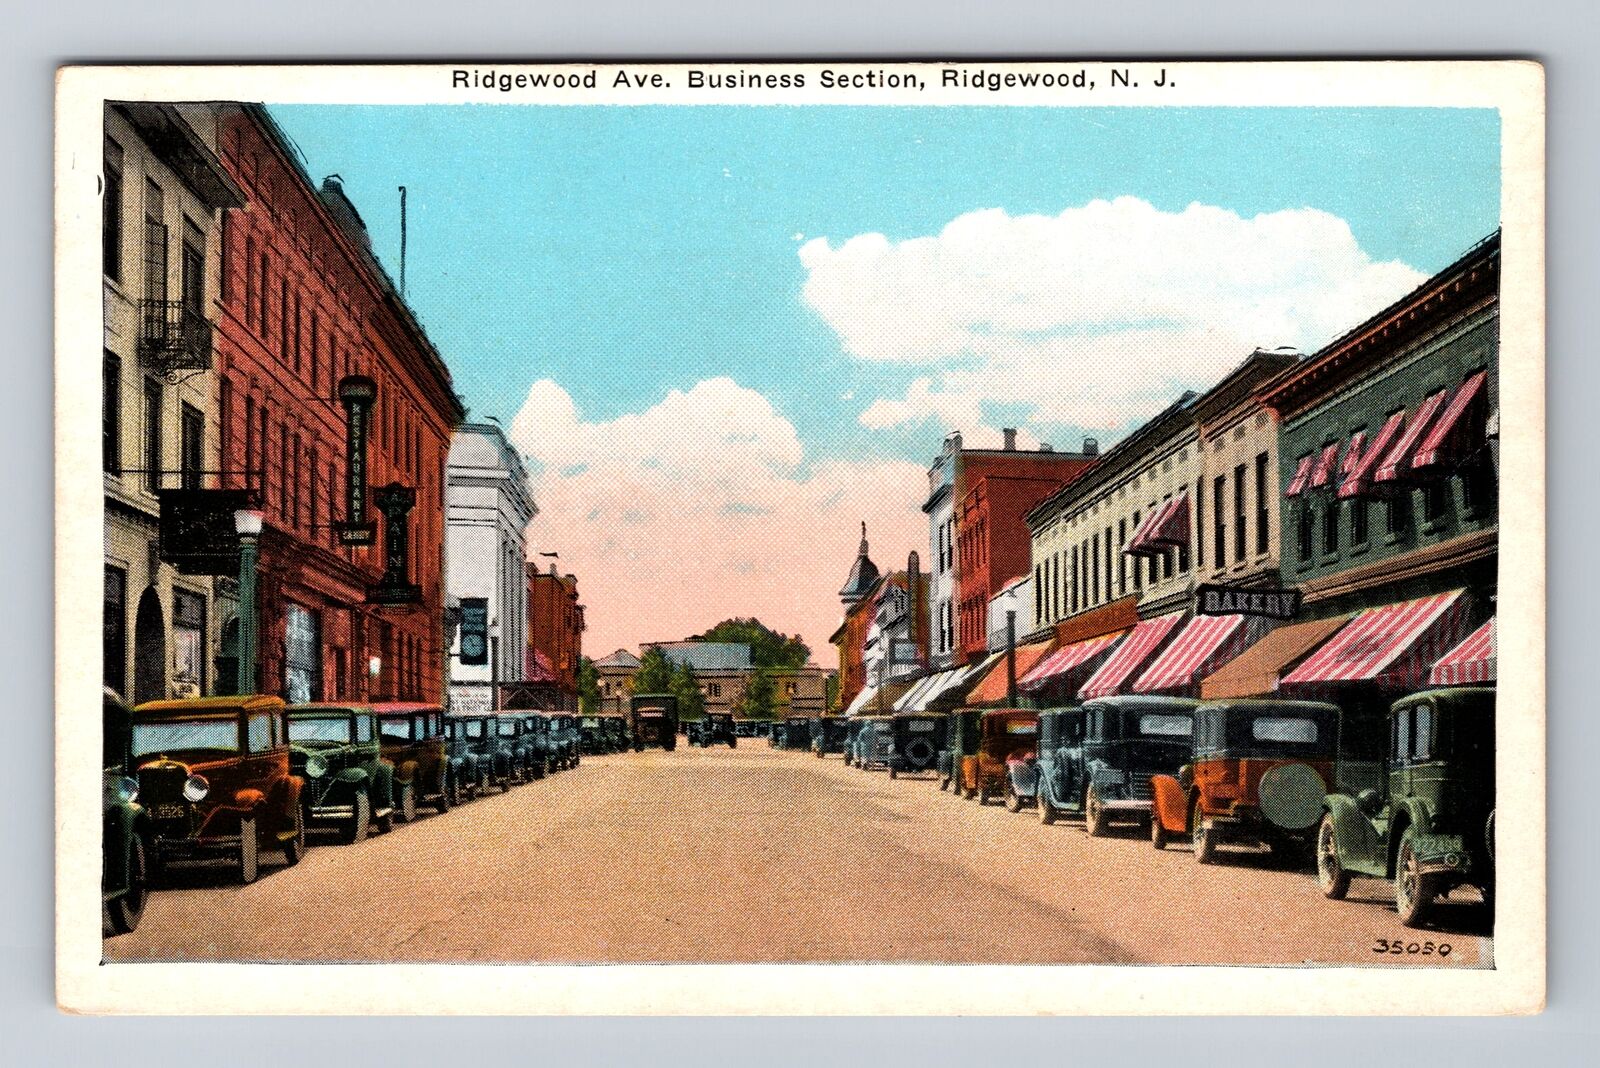 Ridgewood NJ-New Jersey, Ridgewood Ave Business Section, Vintage Postcard